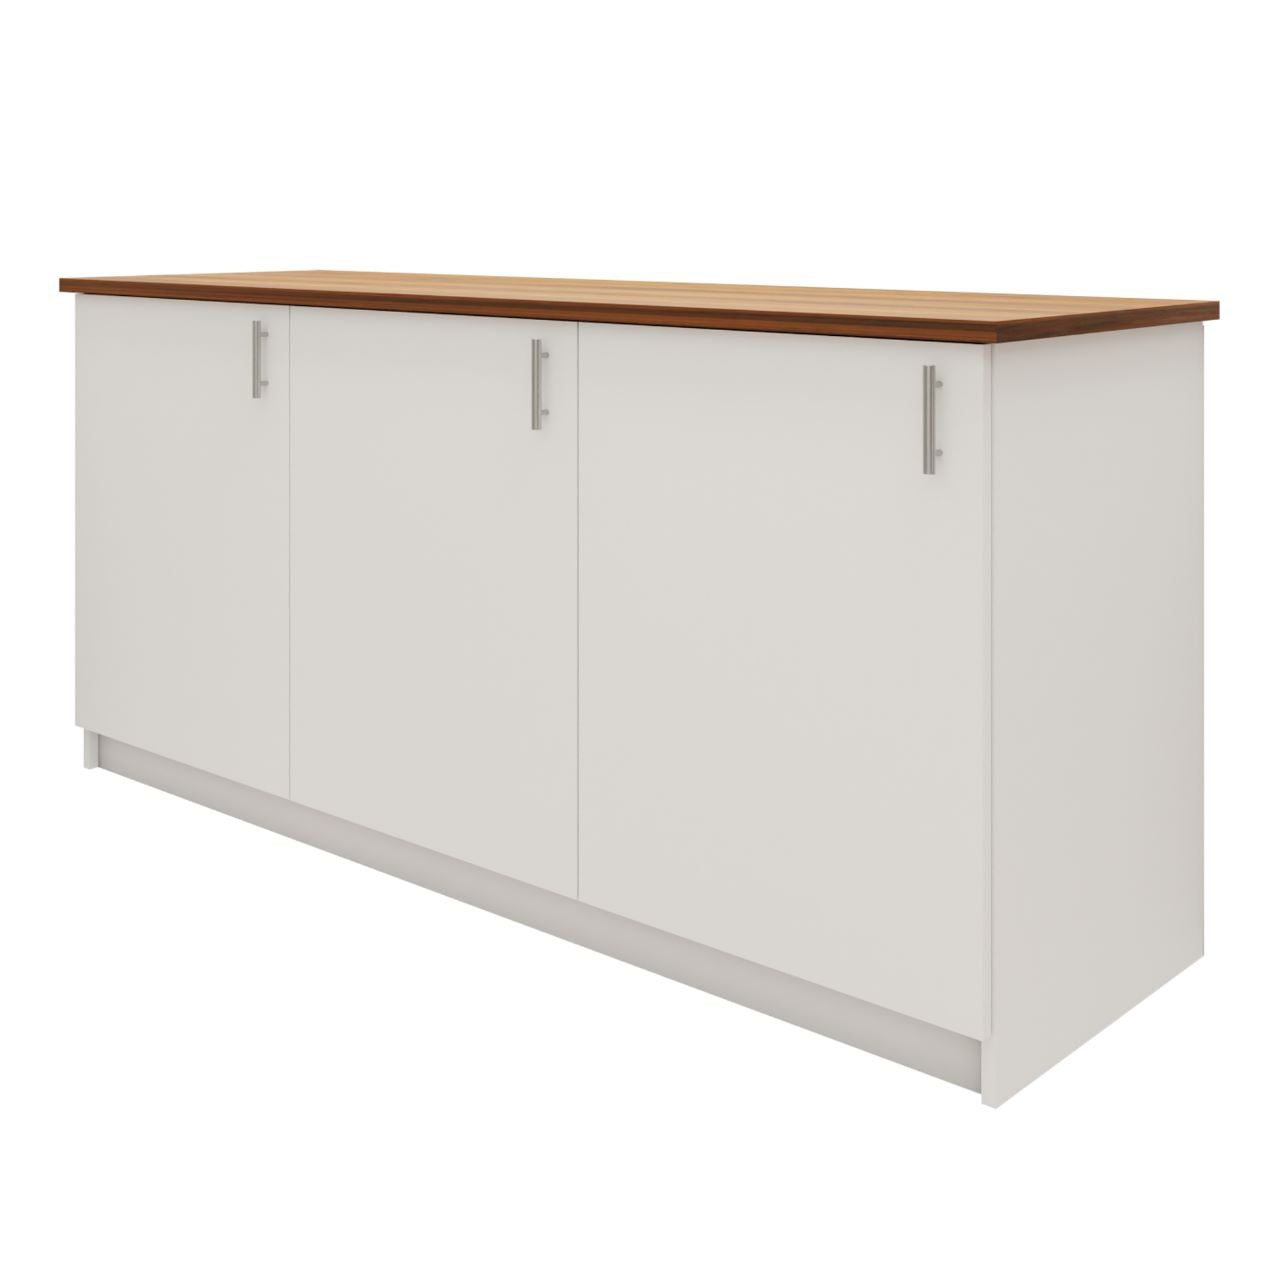 VIKI Kitchen Base Cabinets with  3 doors - size : 180x88x60 CM ( Frosty White ) kitchen cabinet VIKI FURNITURE   